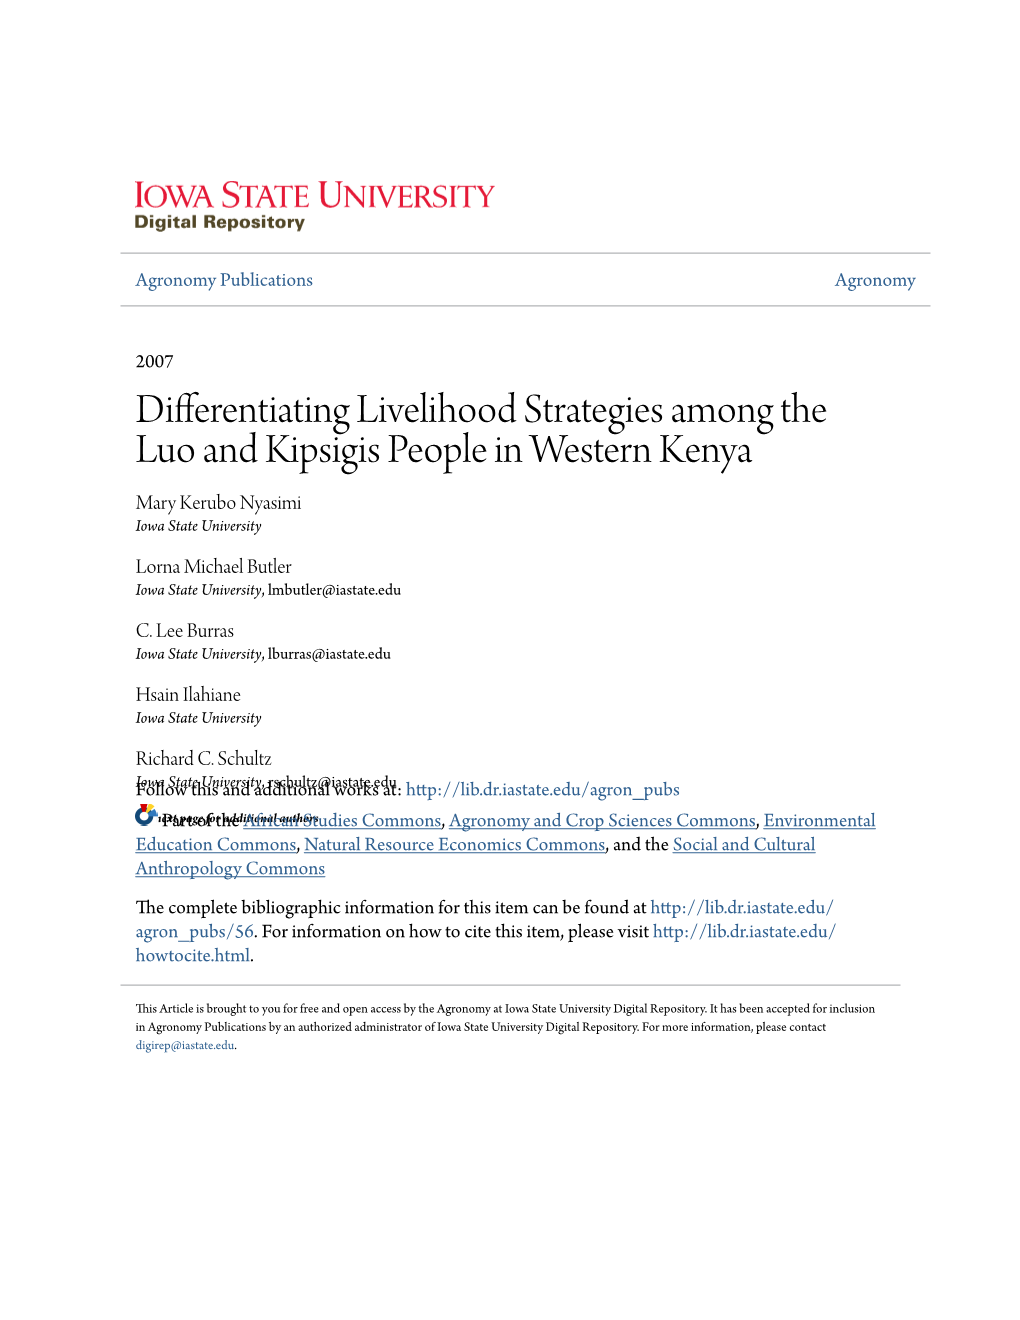 Differentiating Livelihood Strategies Among the Luo and Kipsigis People in Western Kenya Mary Kerubo Nyasimi Iowa State University